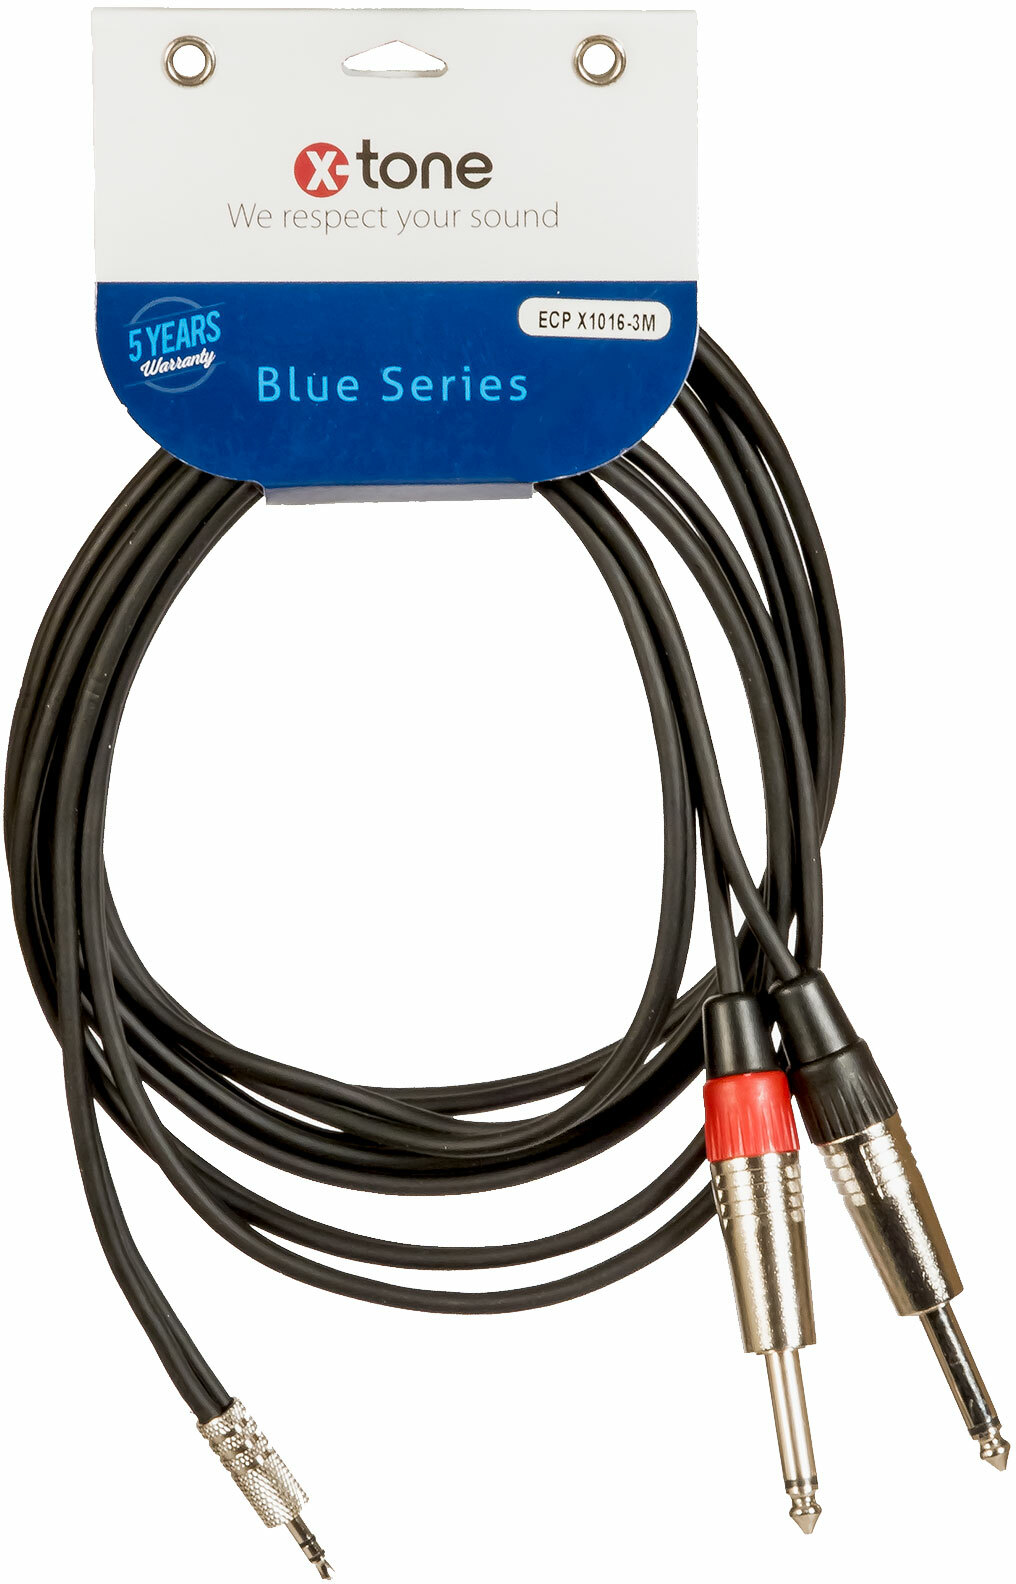 X-tone Mini Jack St / 2 Jack 3m Blue Series (x1016-3m) - Kabel - Main picture